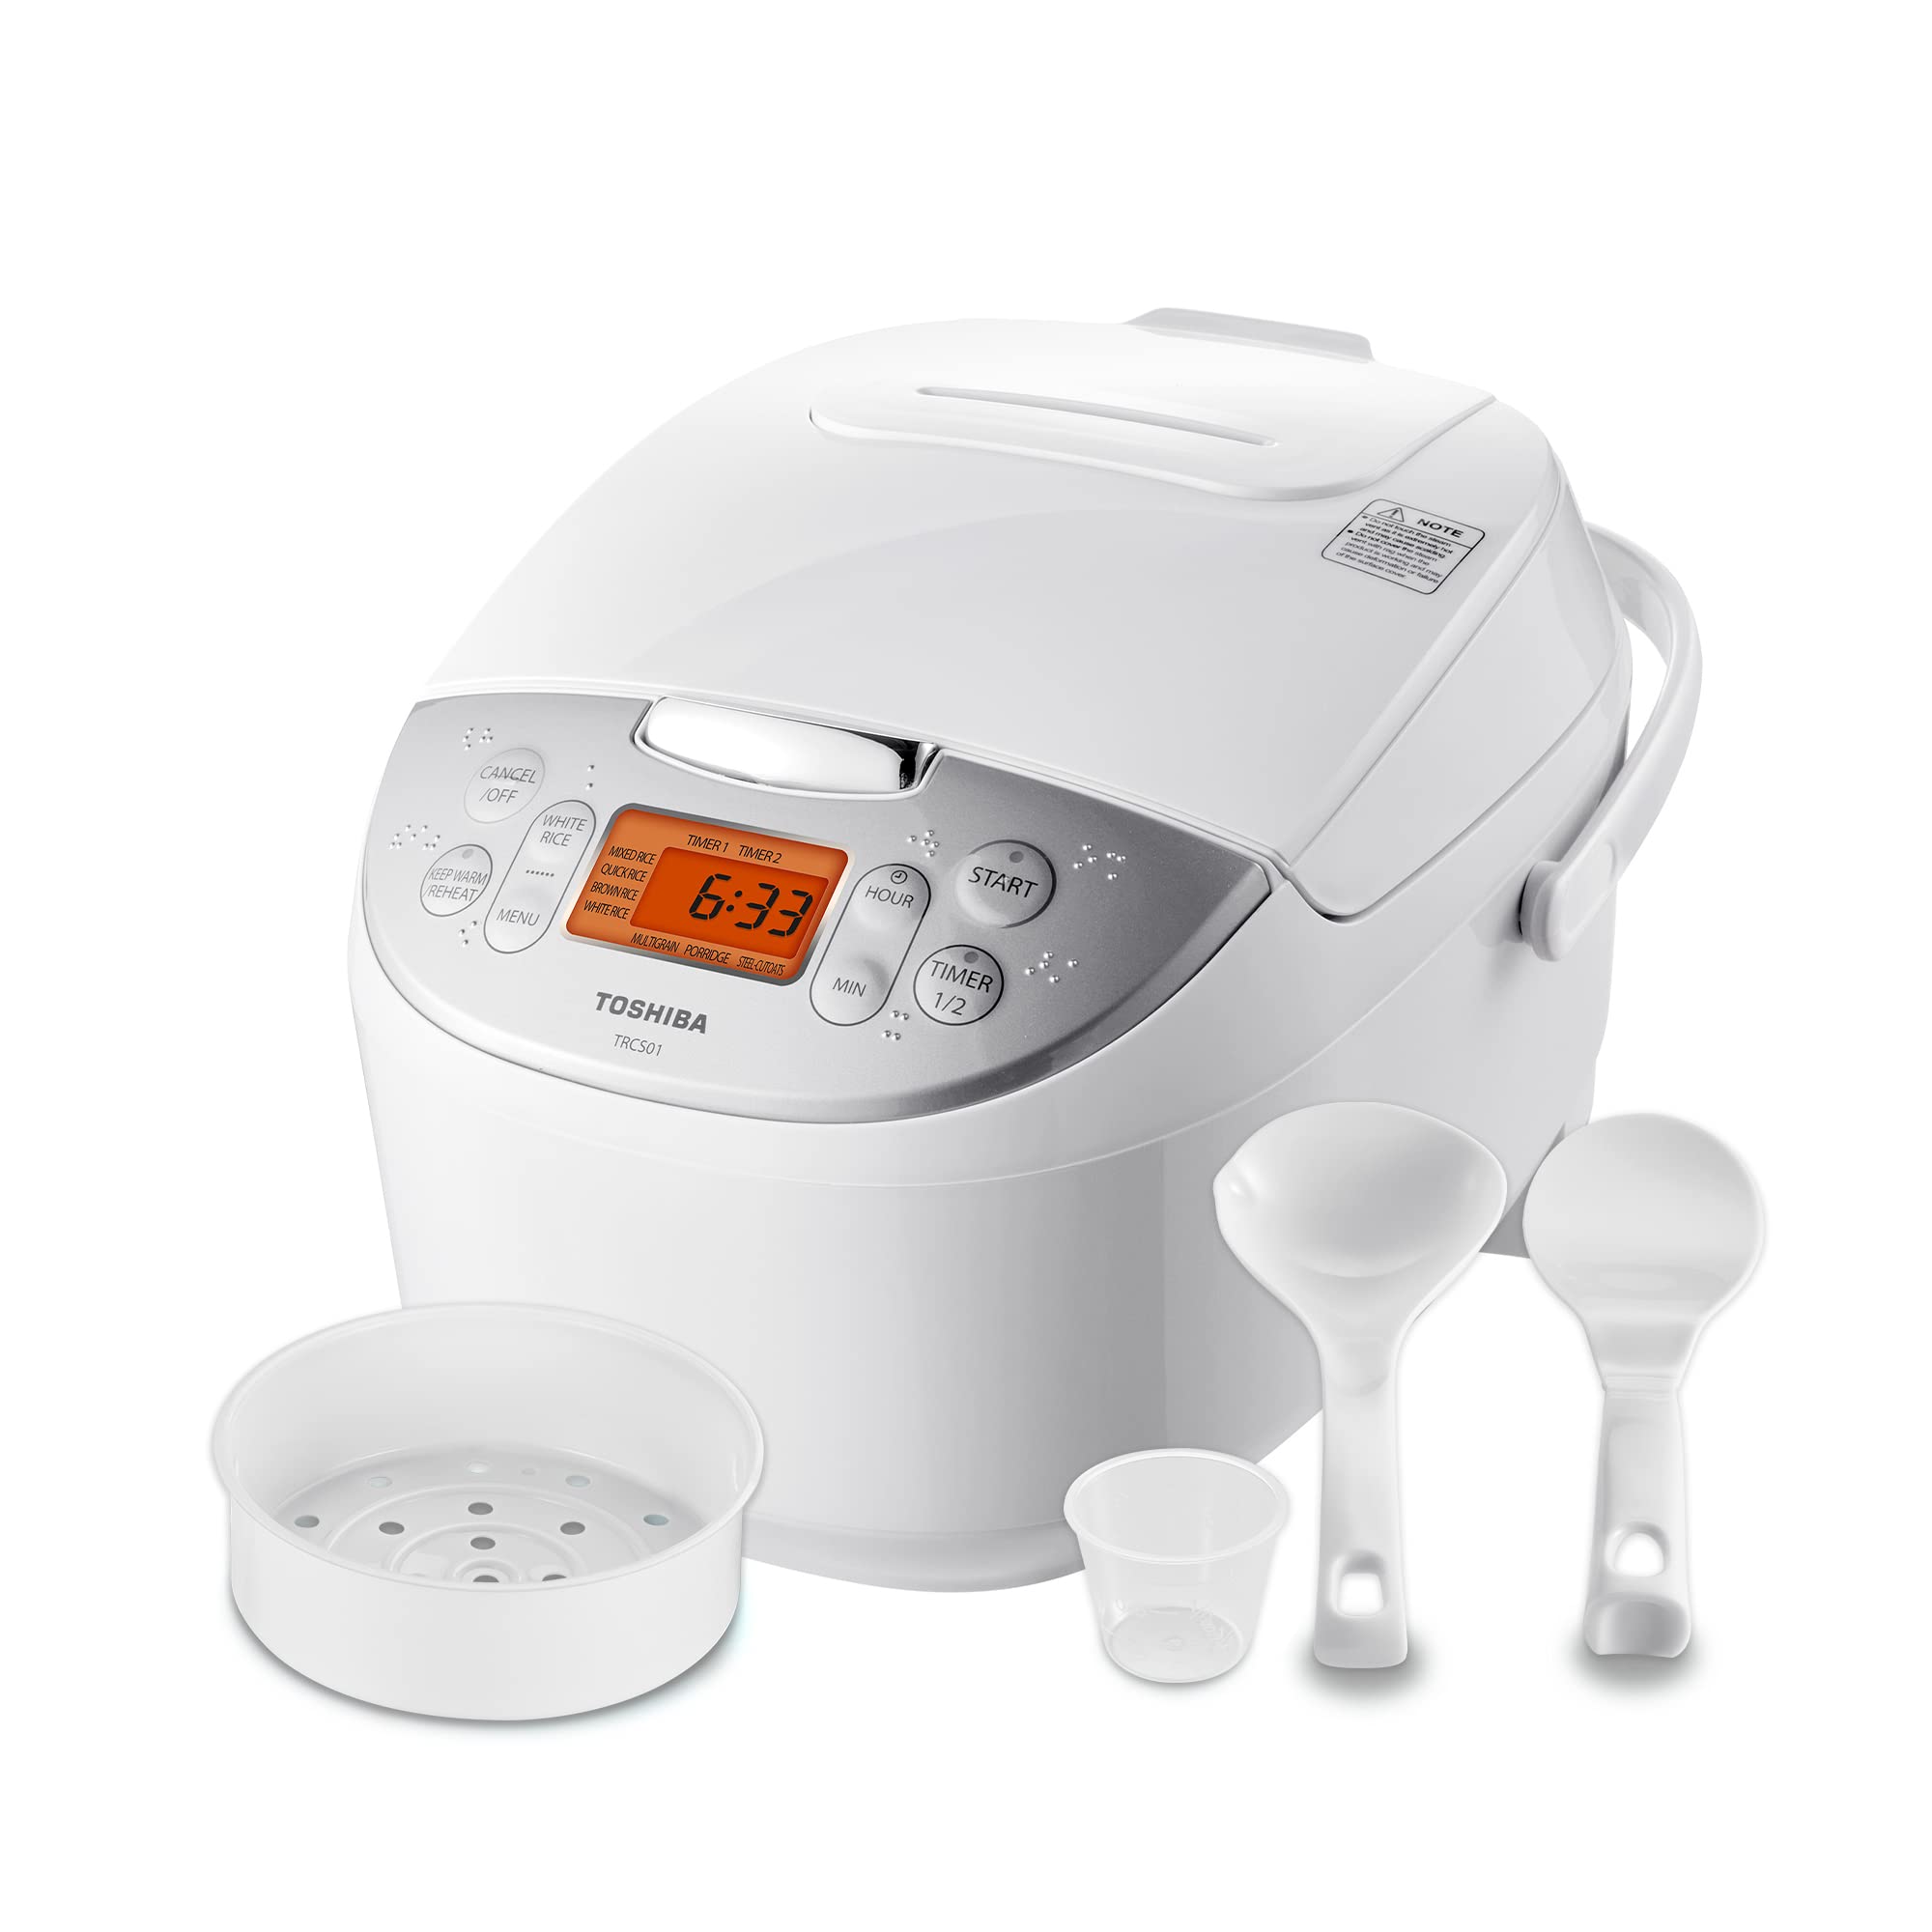  Toshiba 炊飯器 6カップ生米メーカー ファジーロジックテクノロジー搭載炊飯器、7つの調理機能、デジタル表示、2つの遅延タイマーと自動保温、ノン...